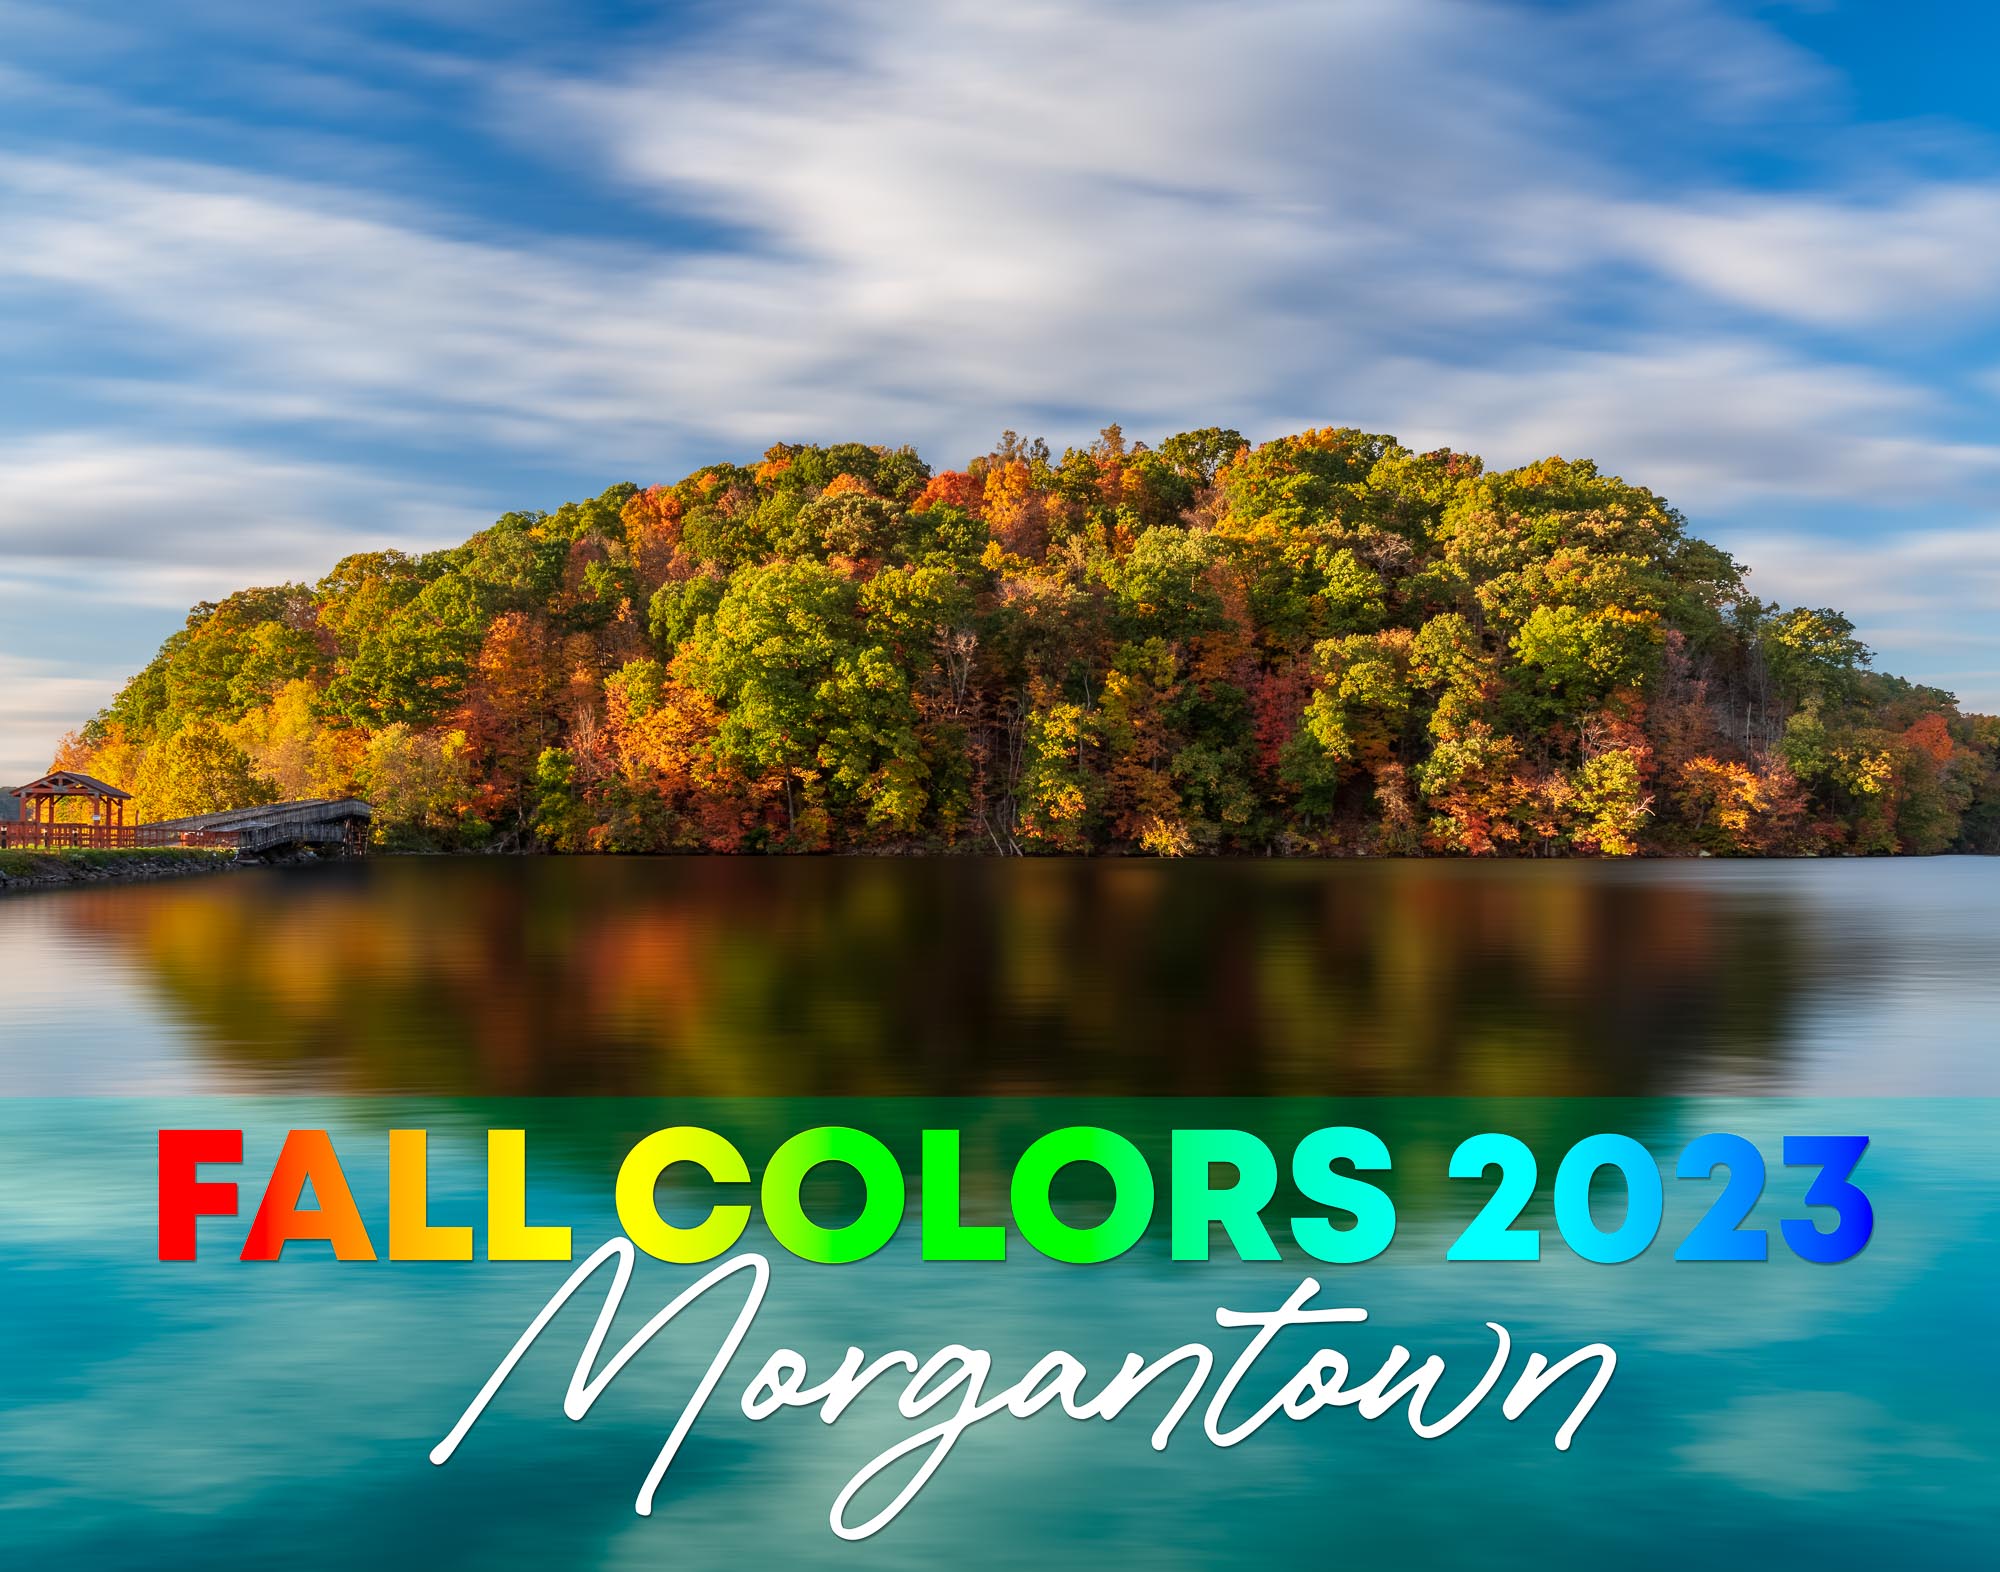 New Calendar for 2023 – Fall Colors around Morgantown